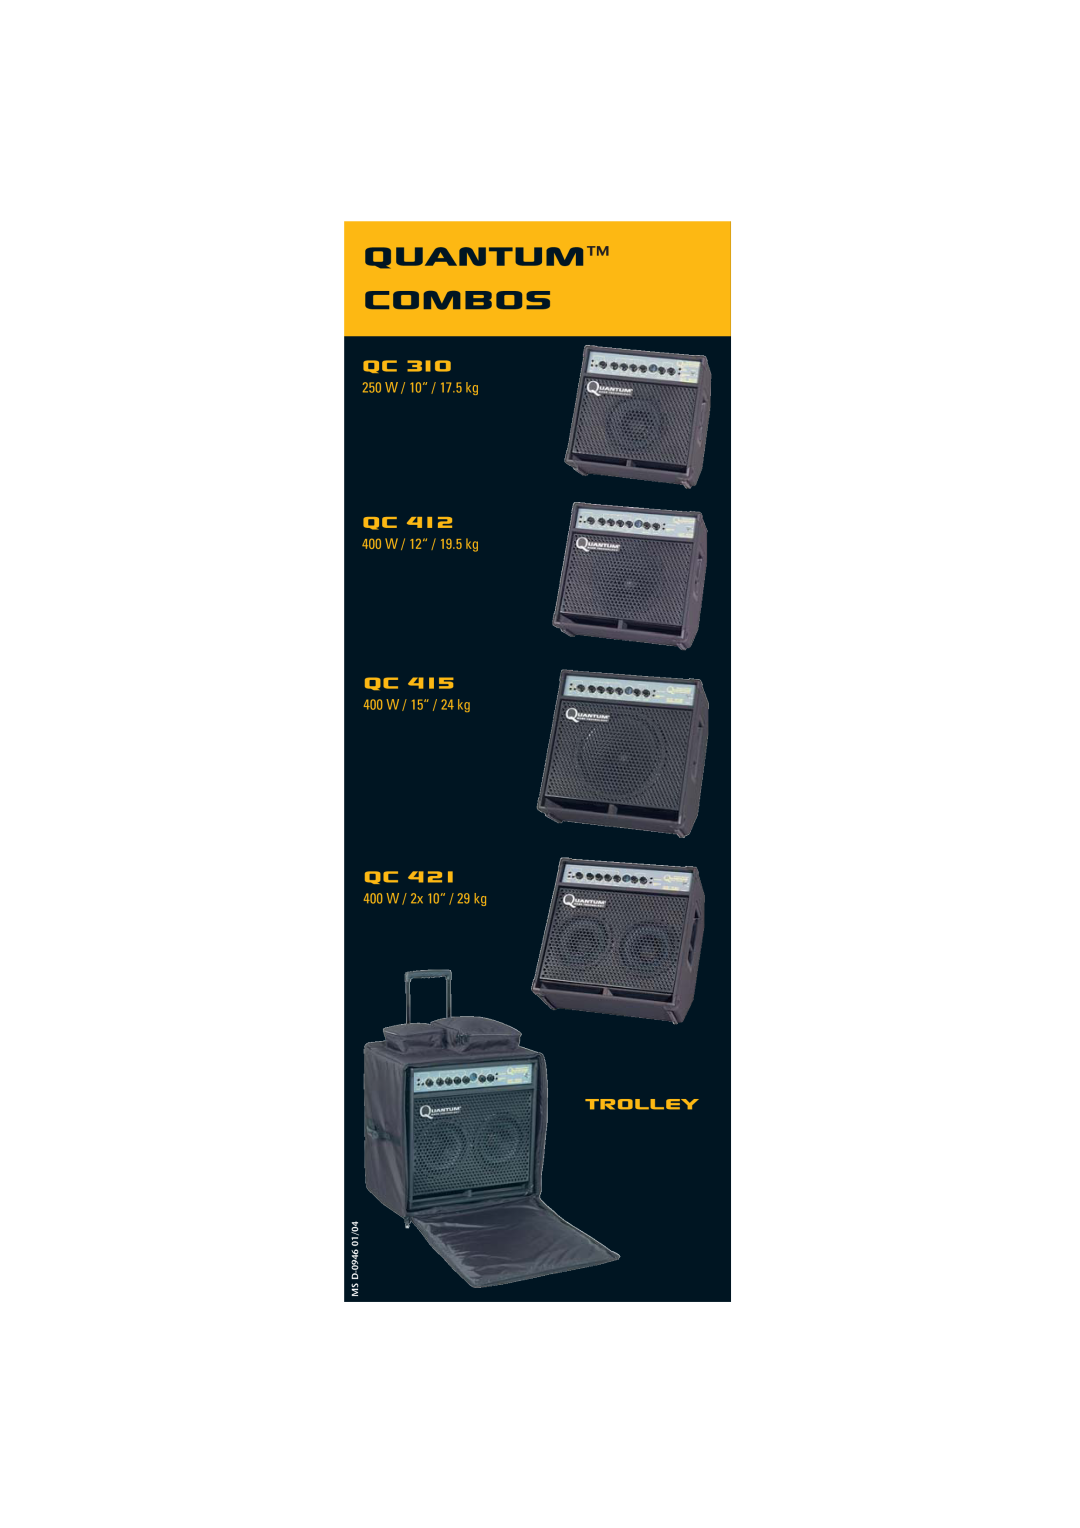 Quantum Audio Speaker manual Quantum Combos, Trolley, 250 W / 10“ / 17.5 kg, 400 W / 12“ / 19.5 kg, 400 W / 15“ / 24 kg 